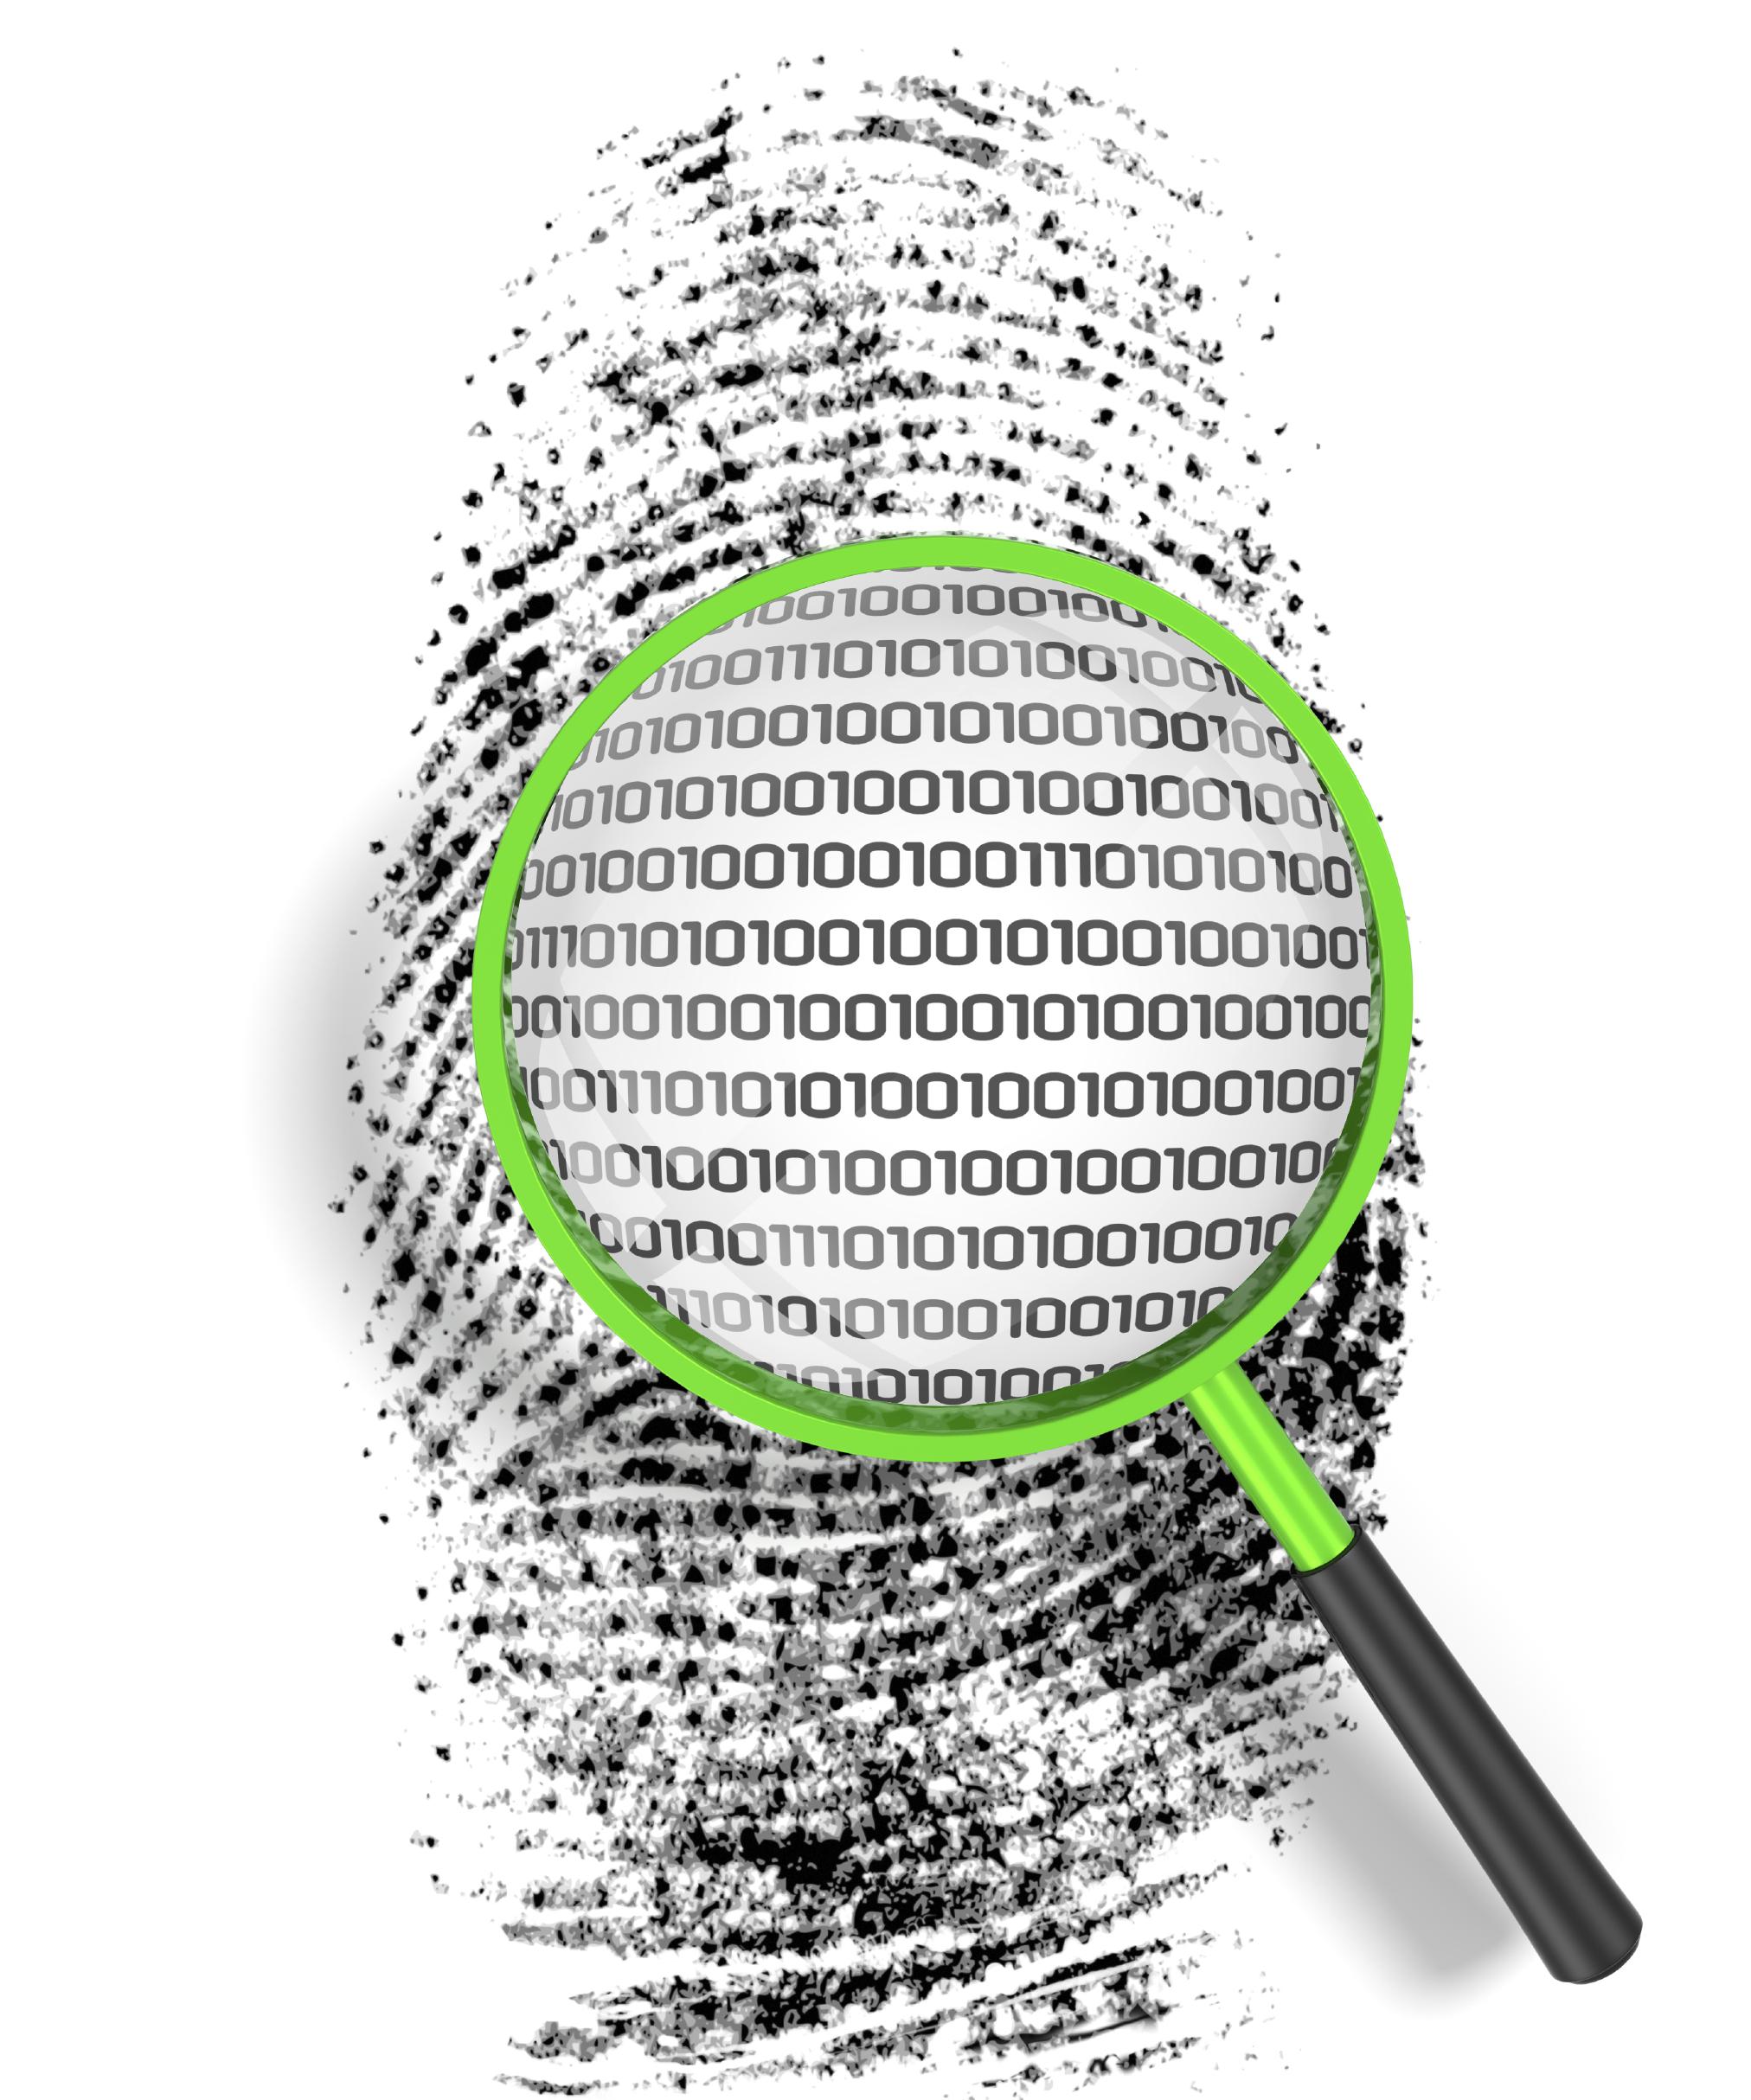 lead-validation-digital-fingerprint